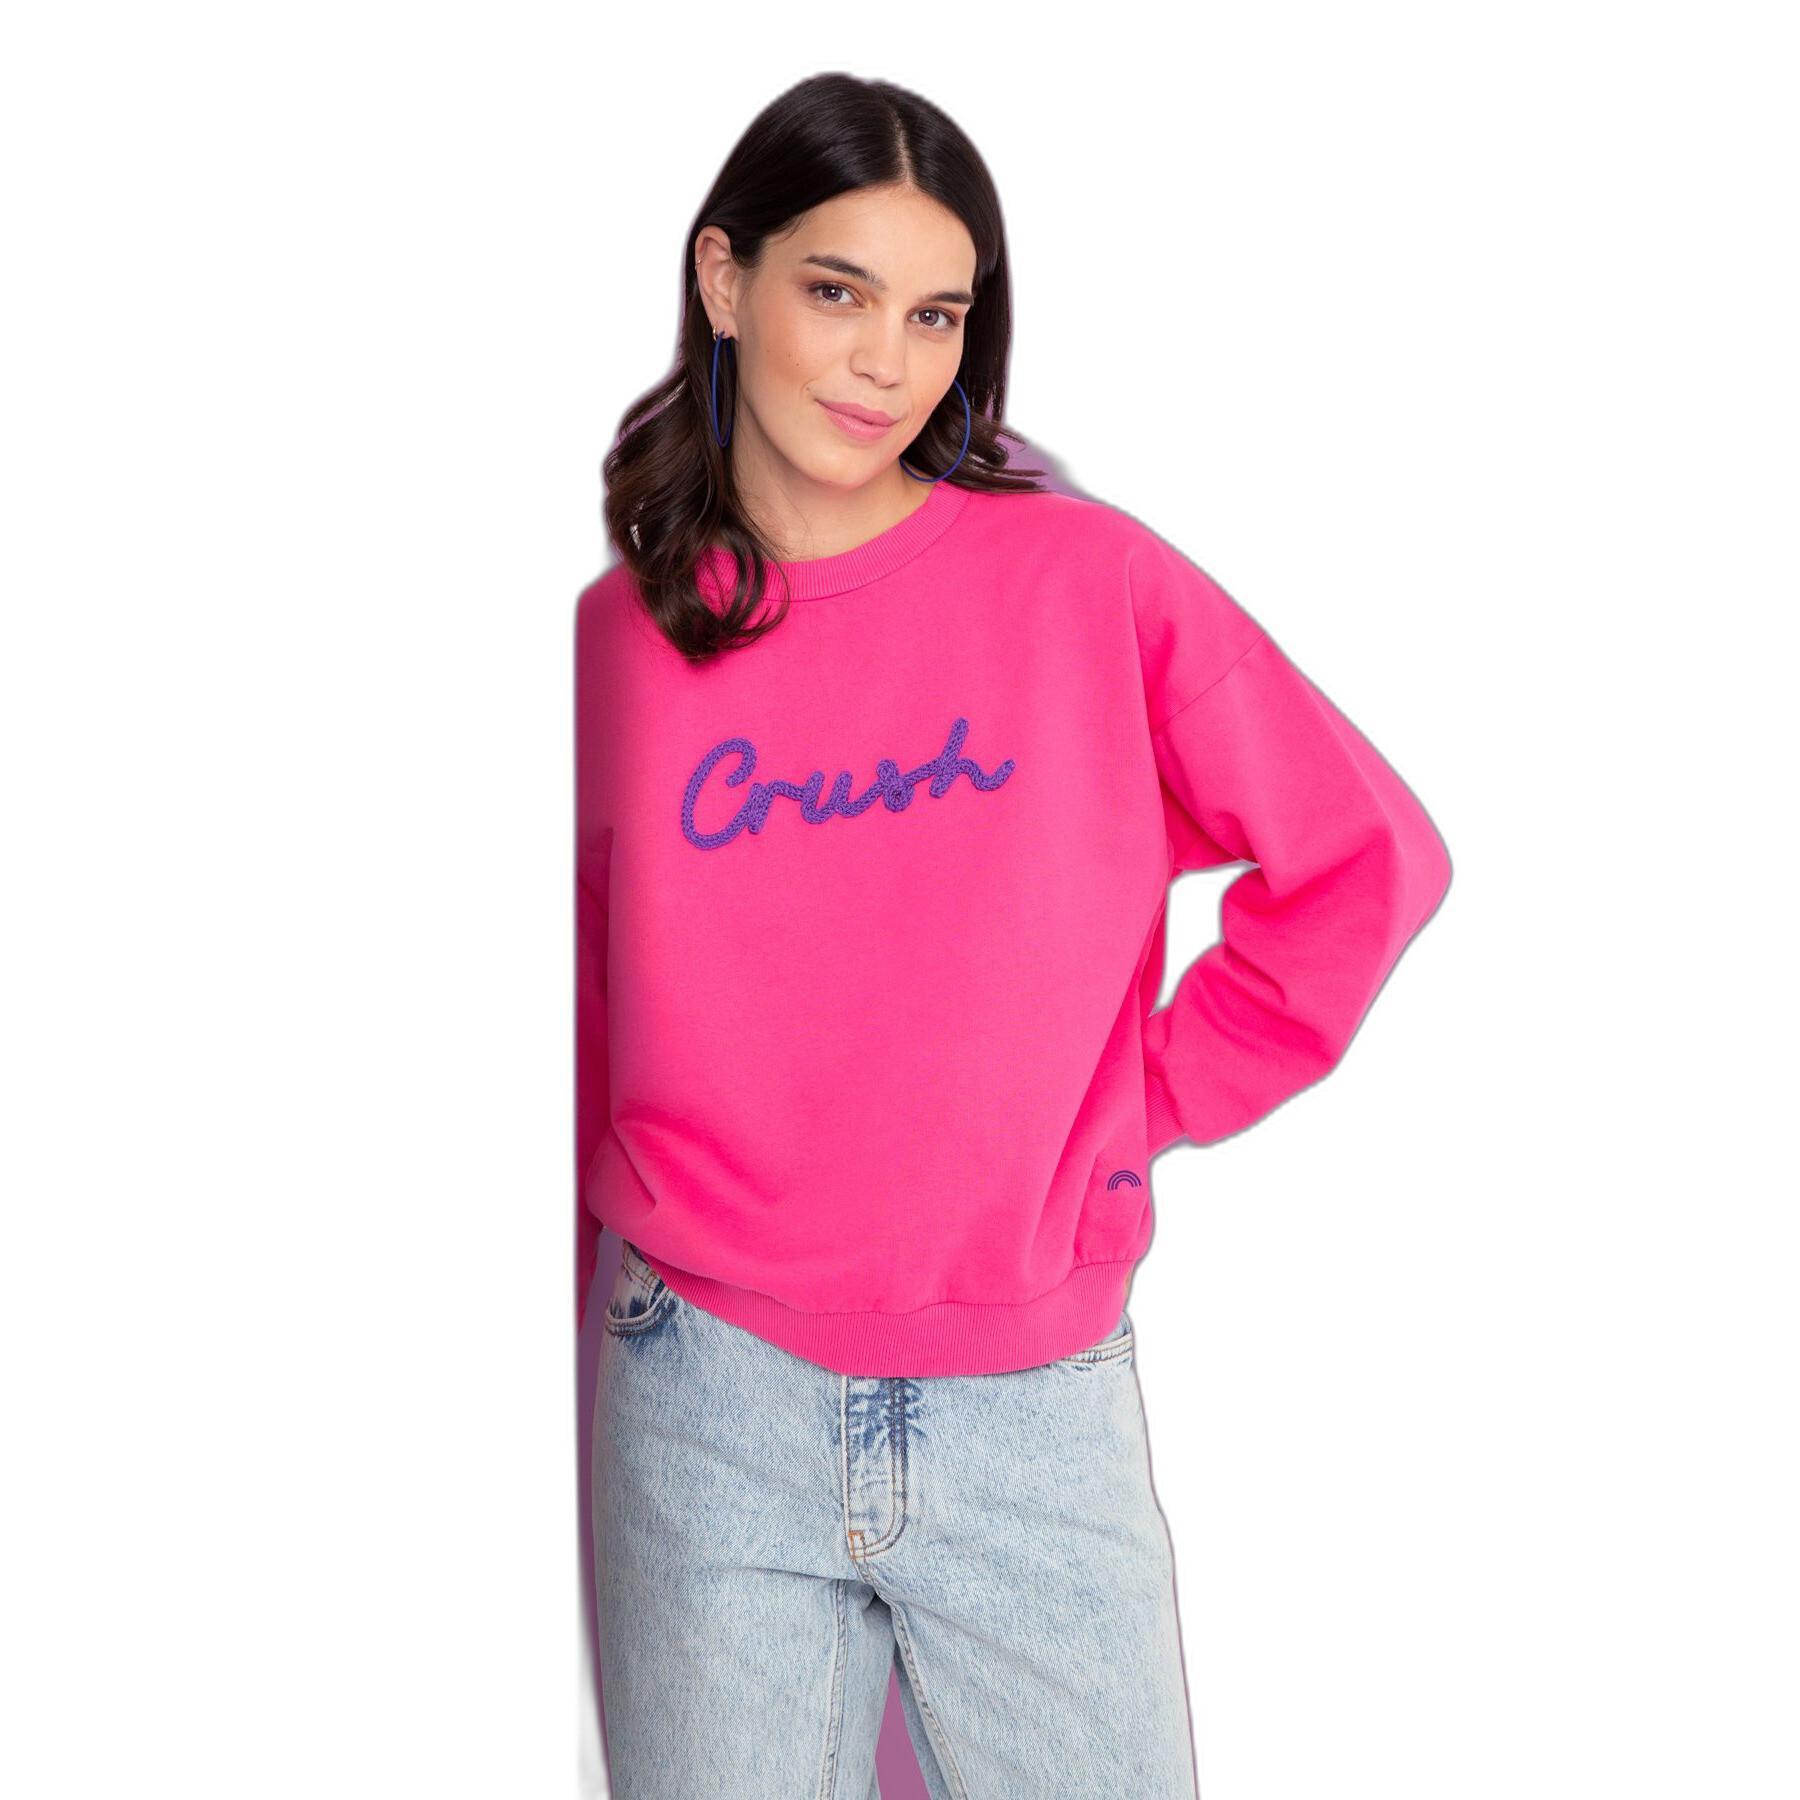 Sweatshirt femme French Disorder Rosie Crush